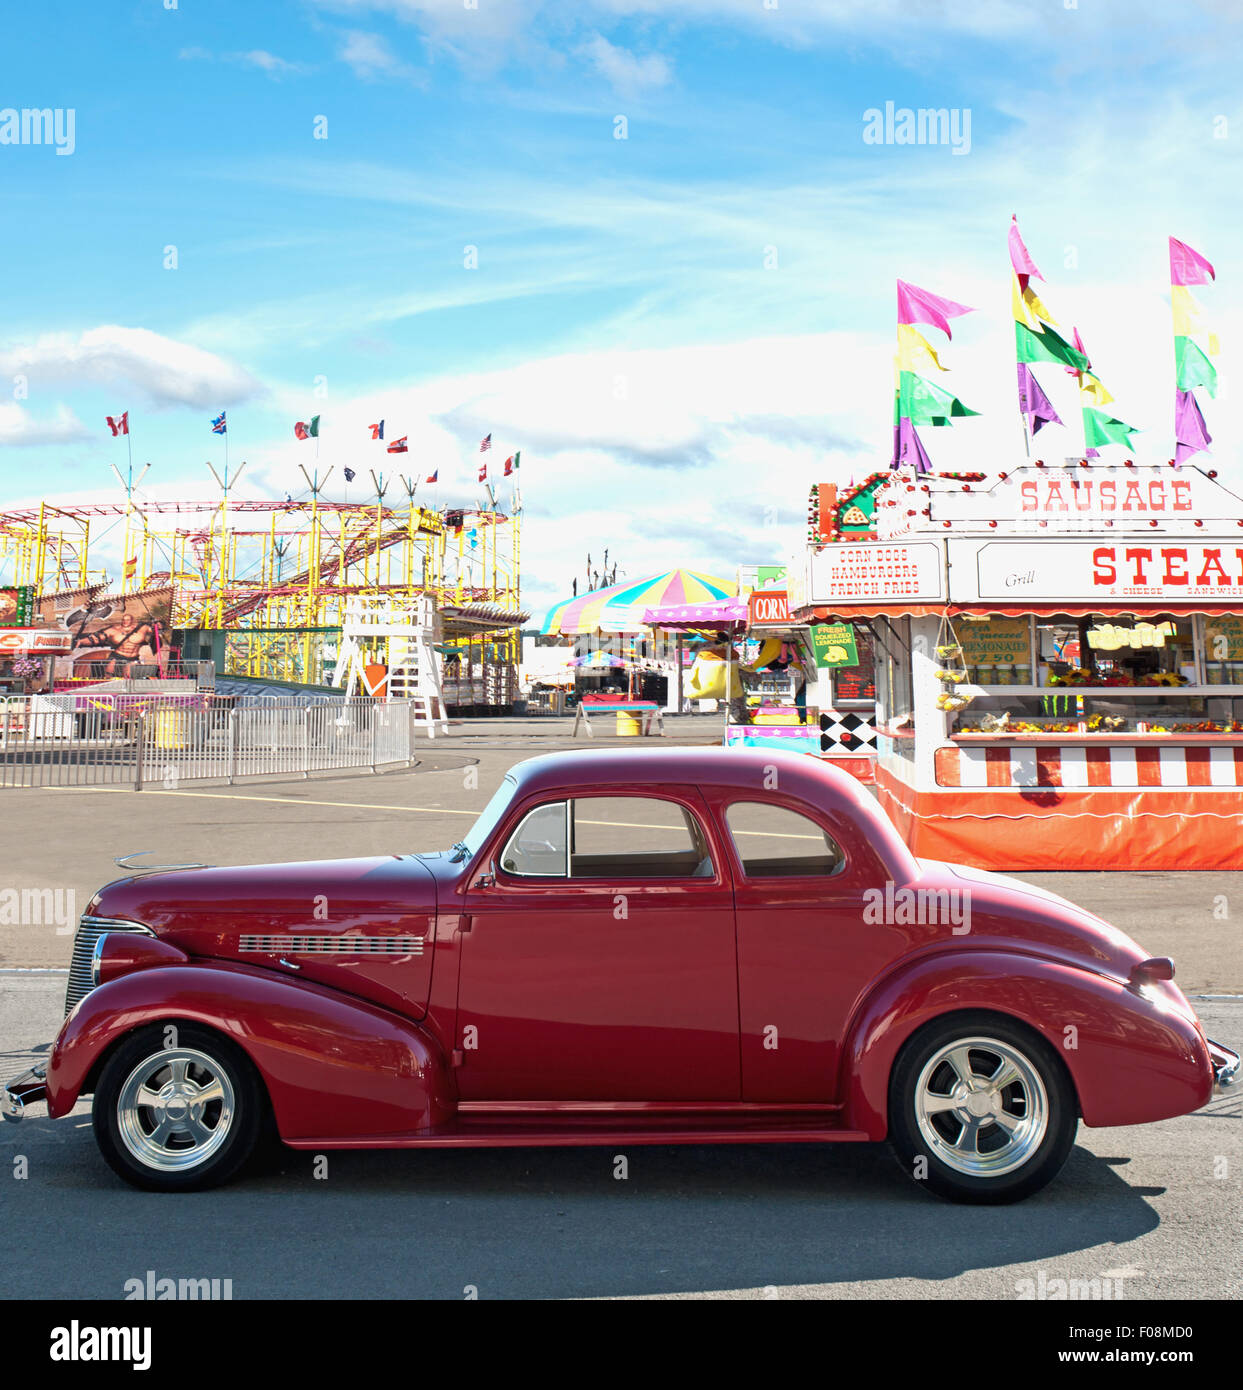 classic car at carnival Stock Photo